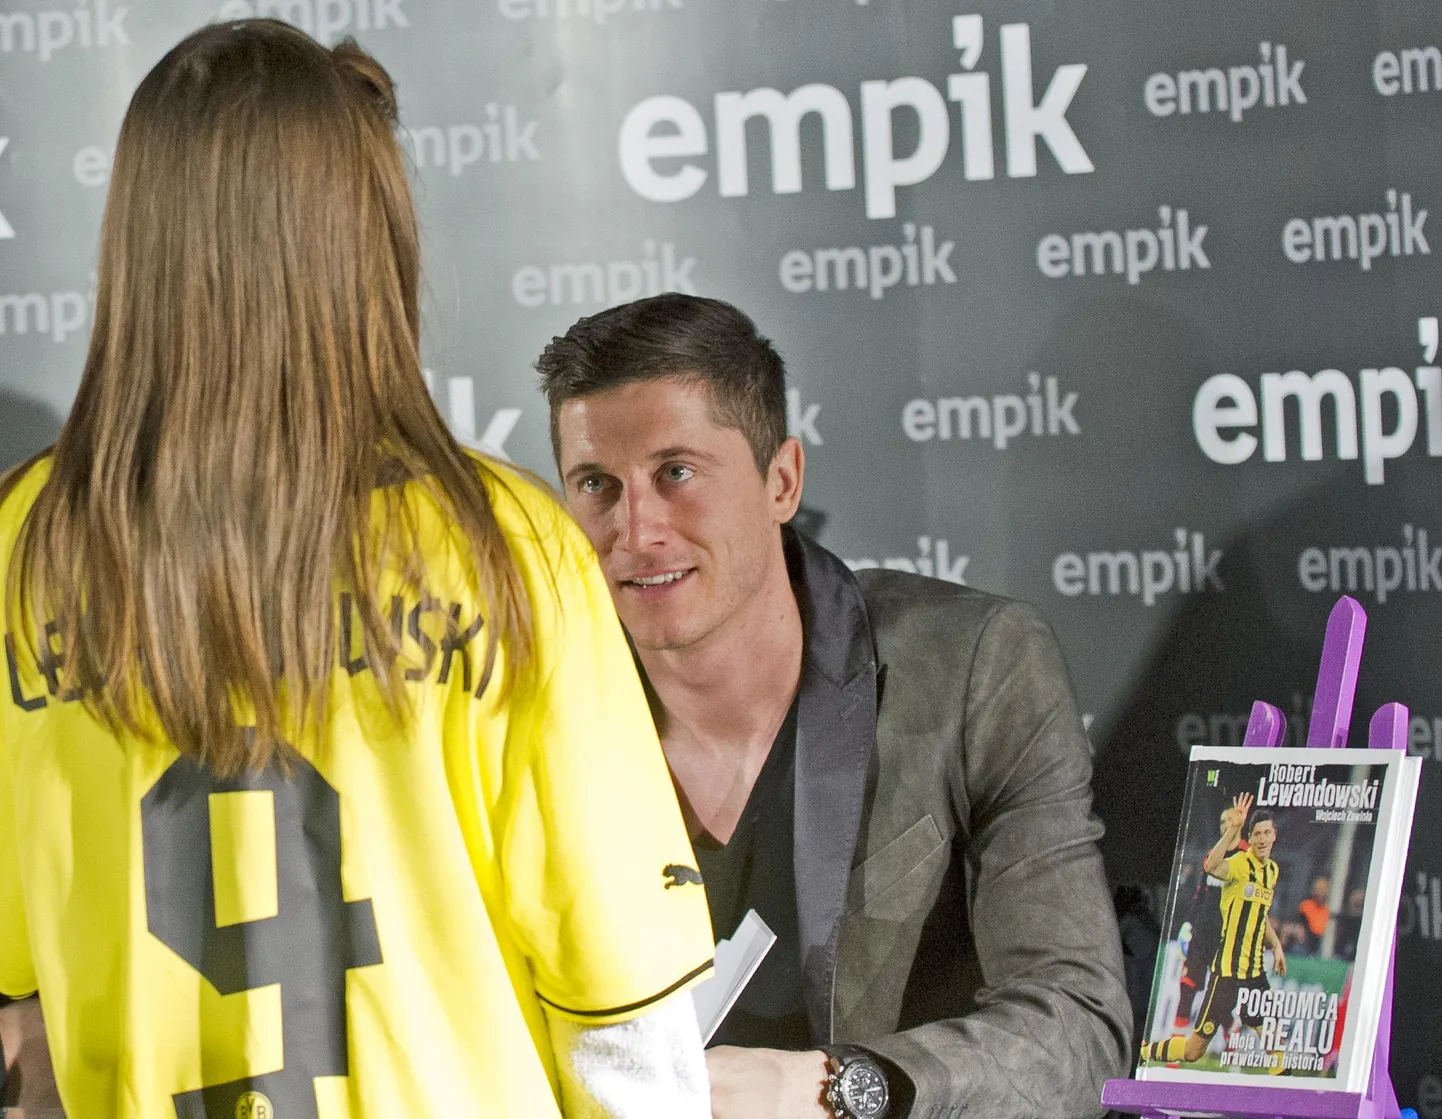 Dortmundi Borussia fänn Robert Lewandowski käest autogrammi küsimas.